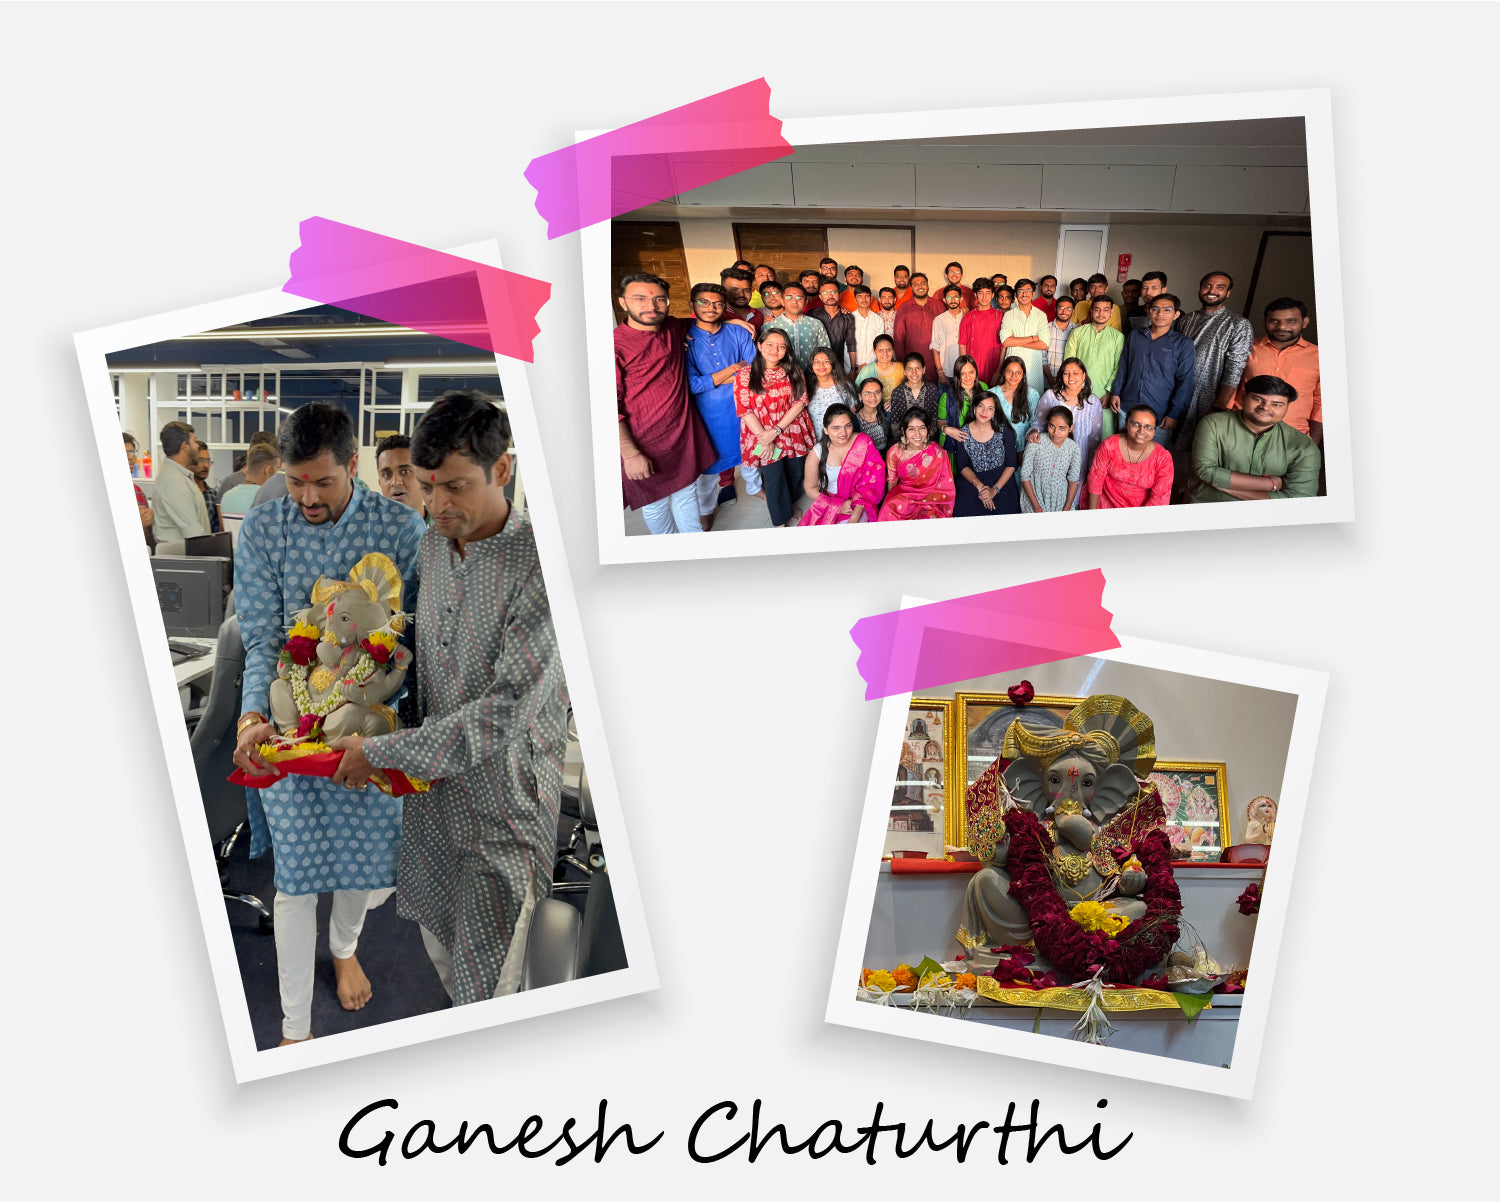 Ganesh Chaturthi celebration at Lucent Innovation